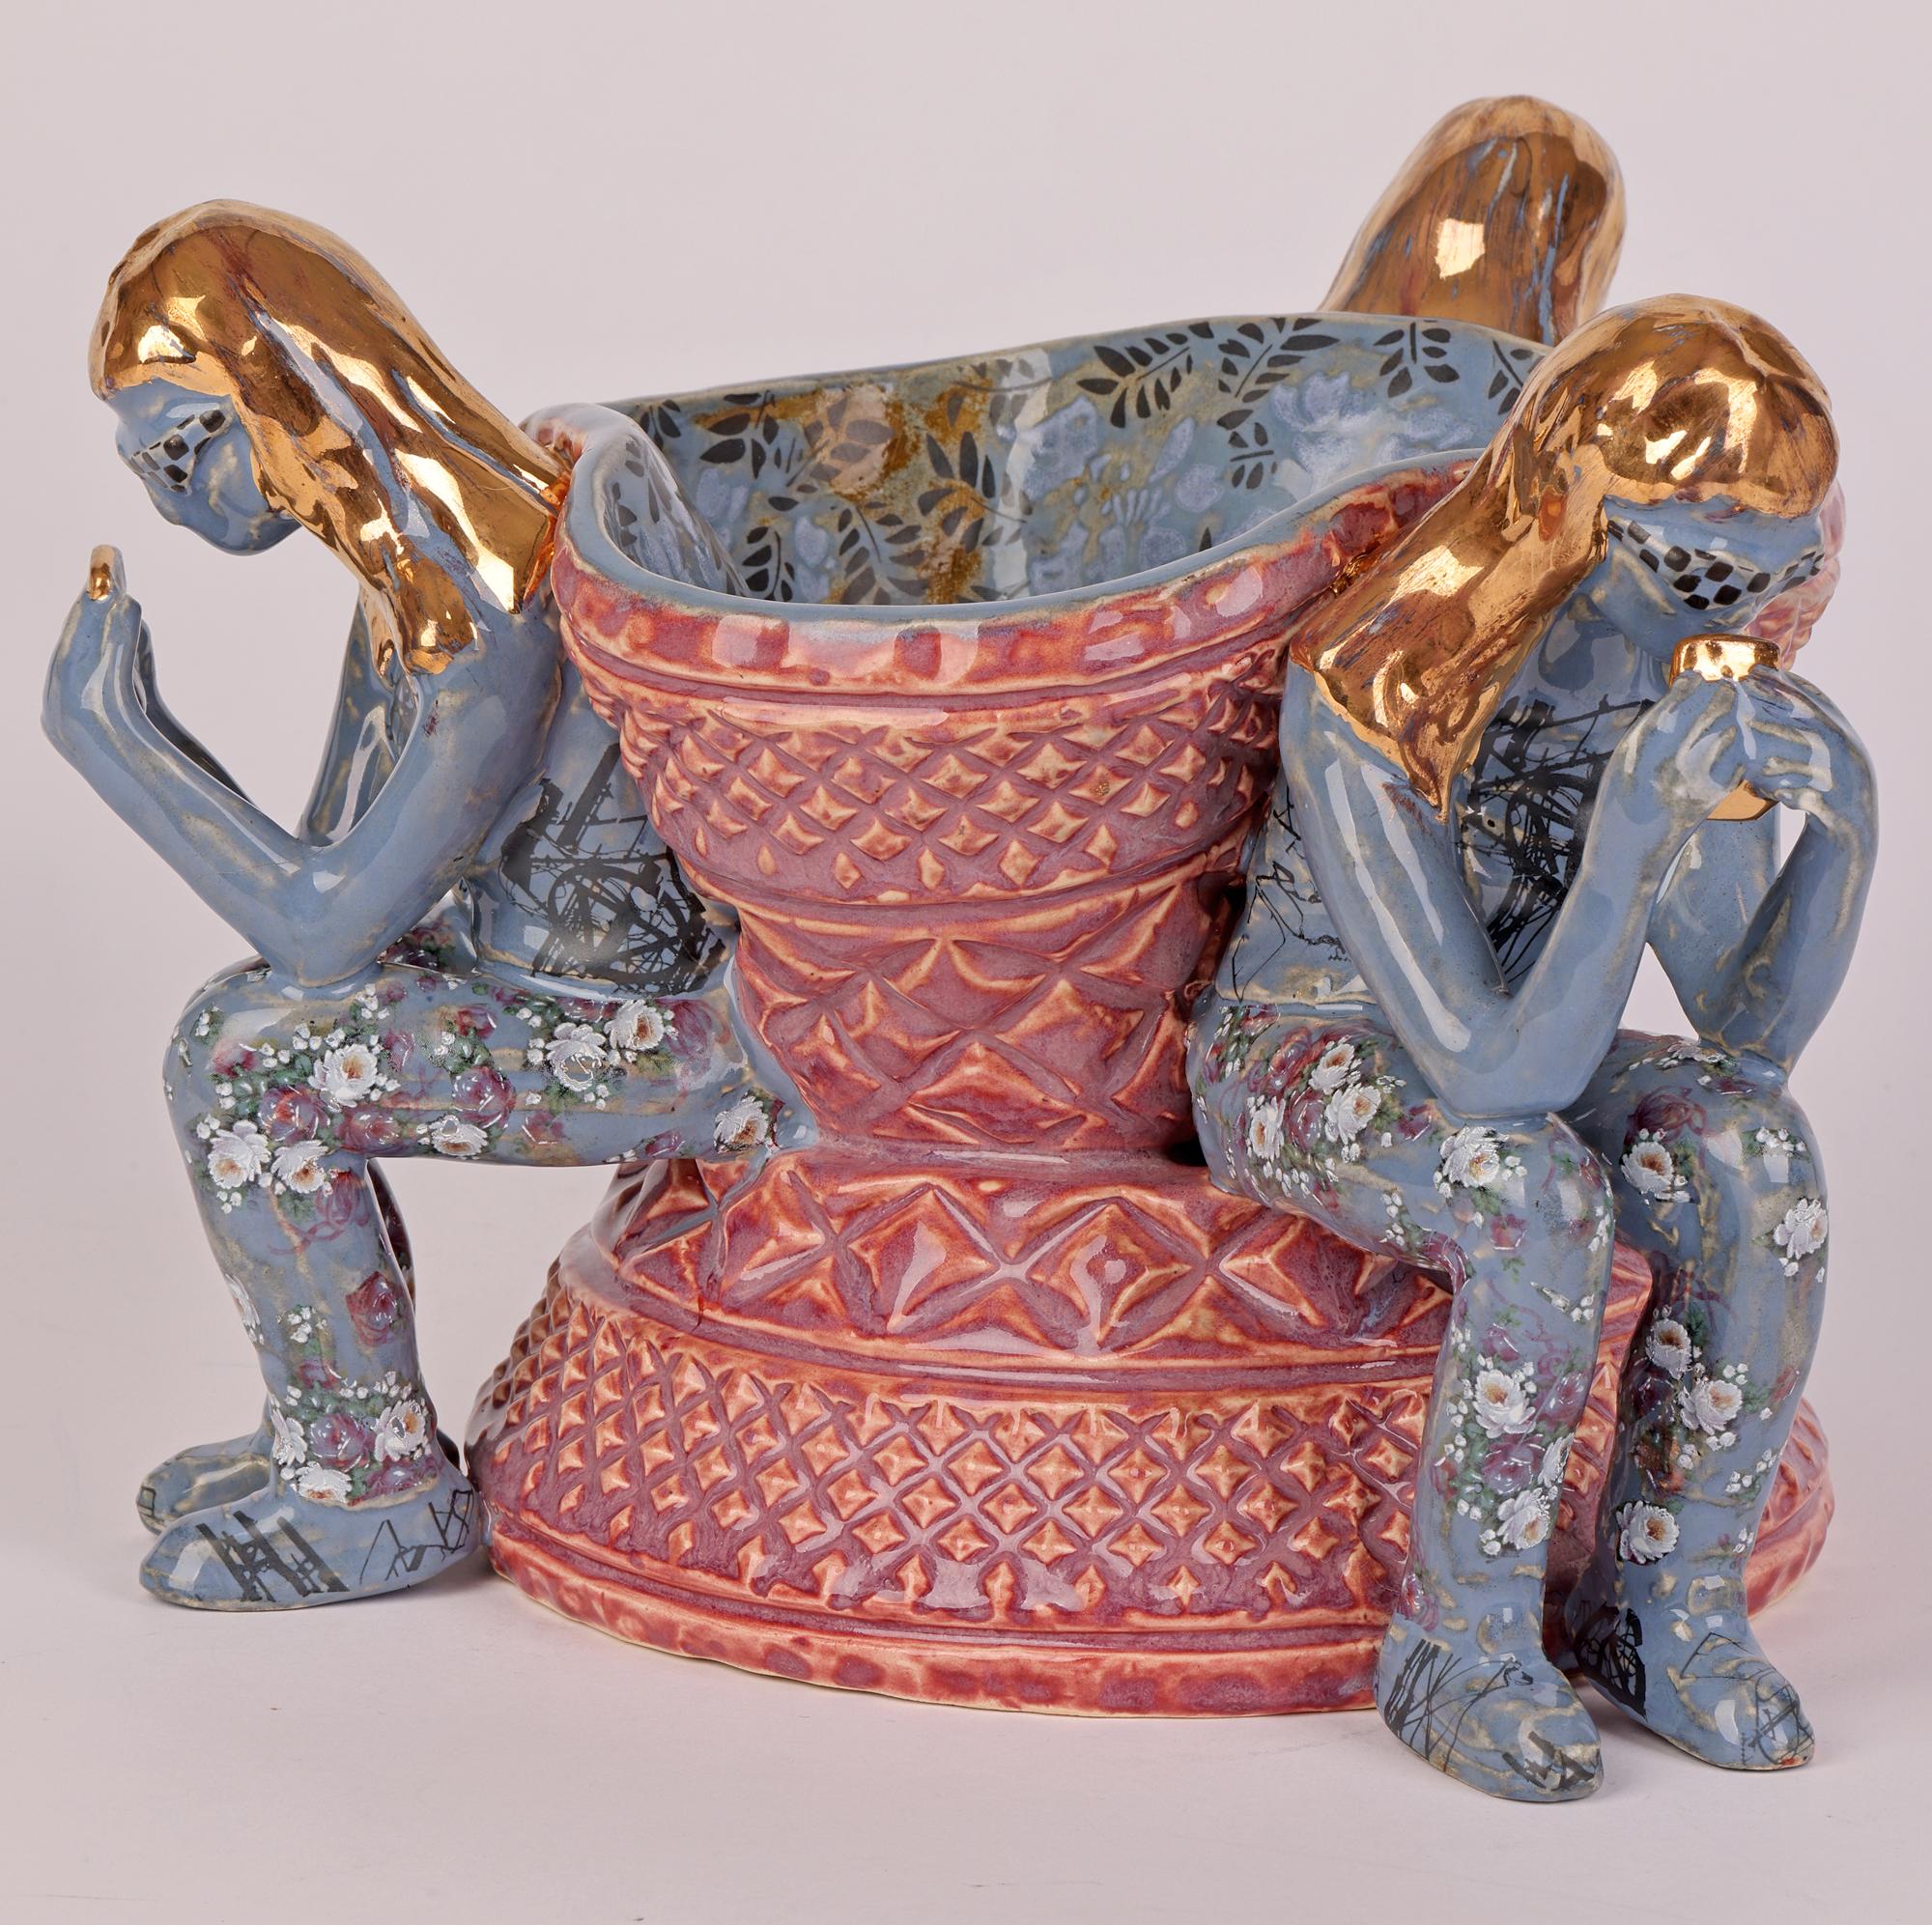 Glazed Carol McNicoll Studio Pottery Figural Bowl Titled Conversations